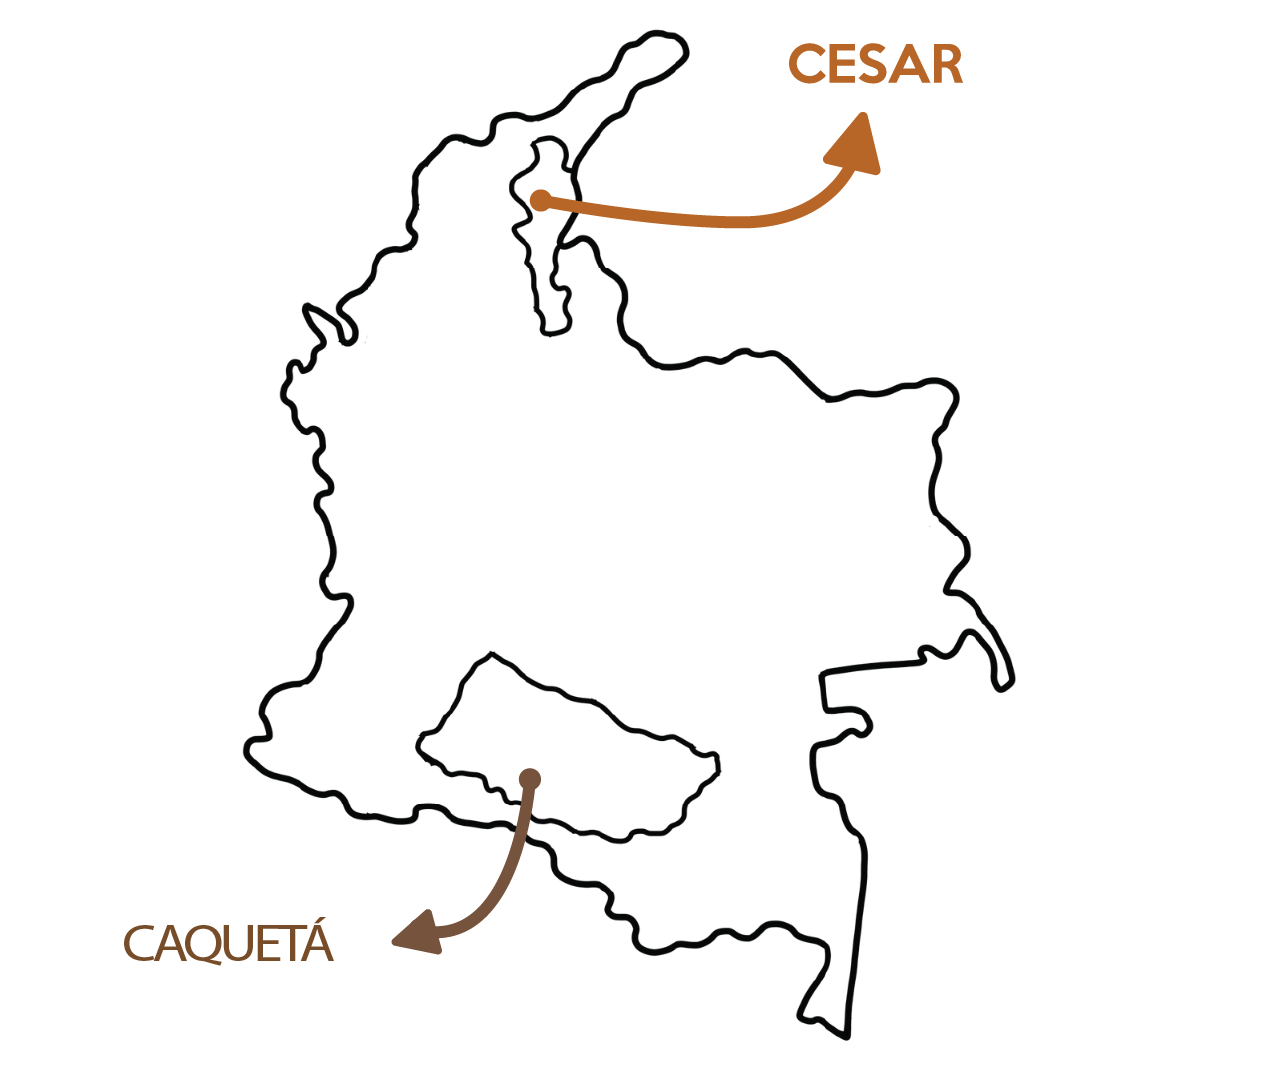 cesar-map